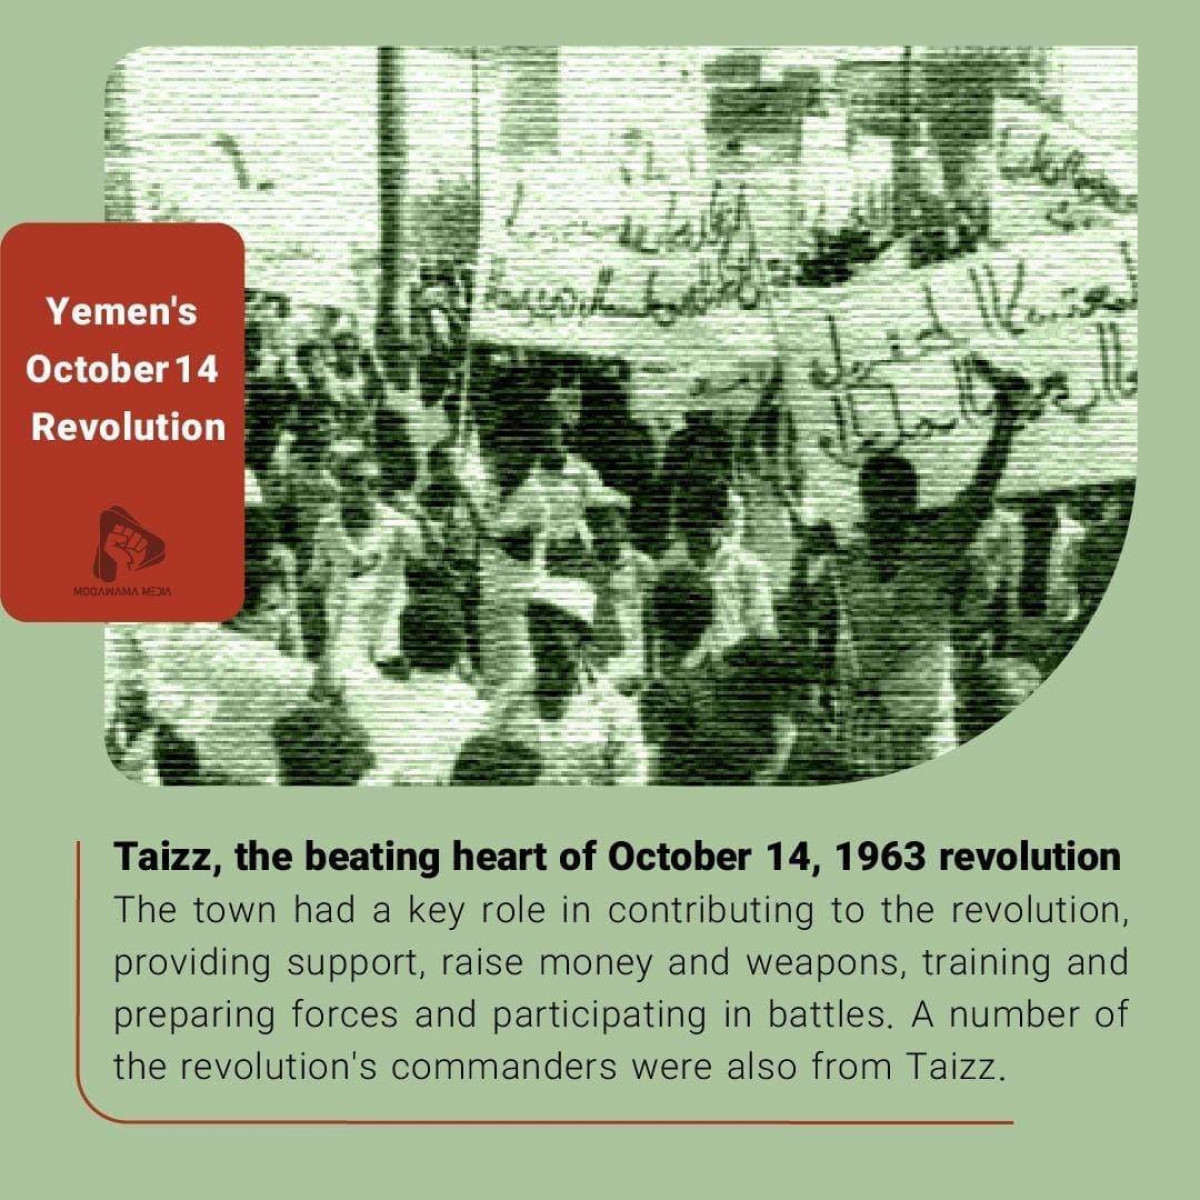 Yemen's October 14 Revolution 3